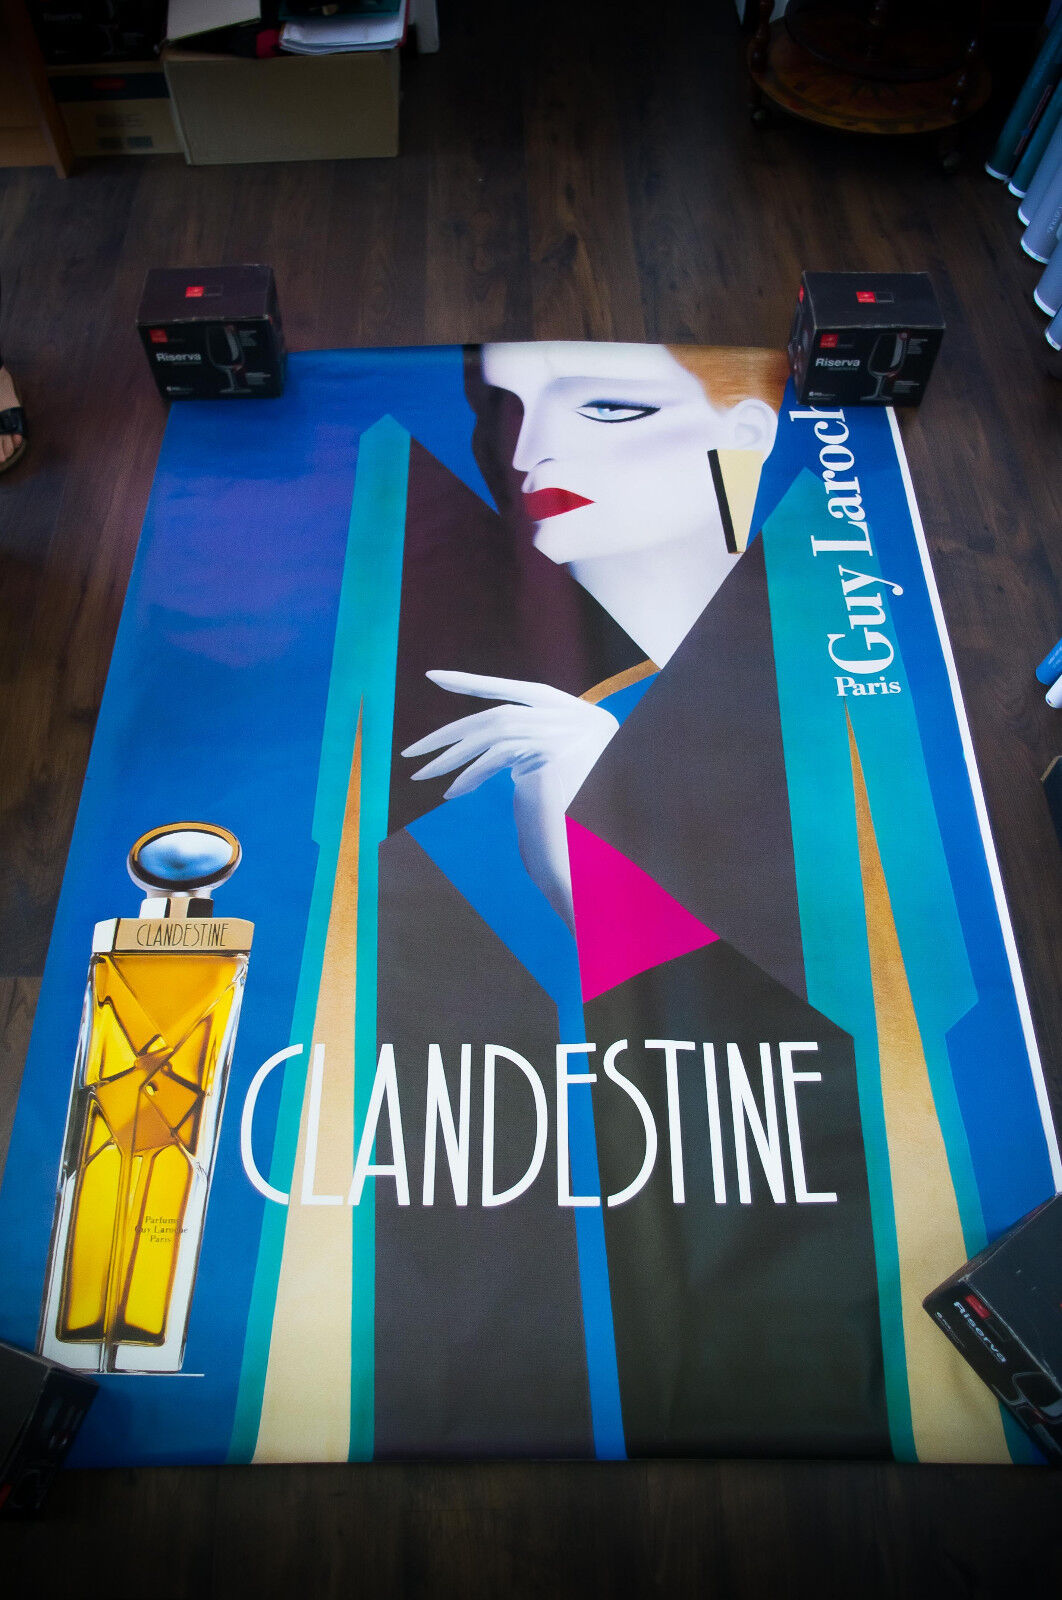 GUY LAROCHE CLANDESTINE BY RAZZIA 1986 4x6 ft Original Vintage Poster